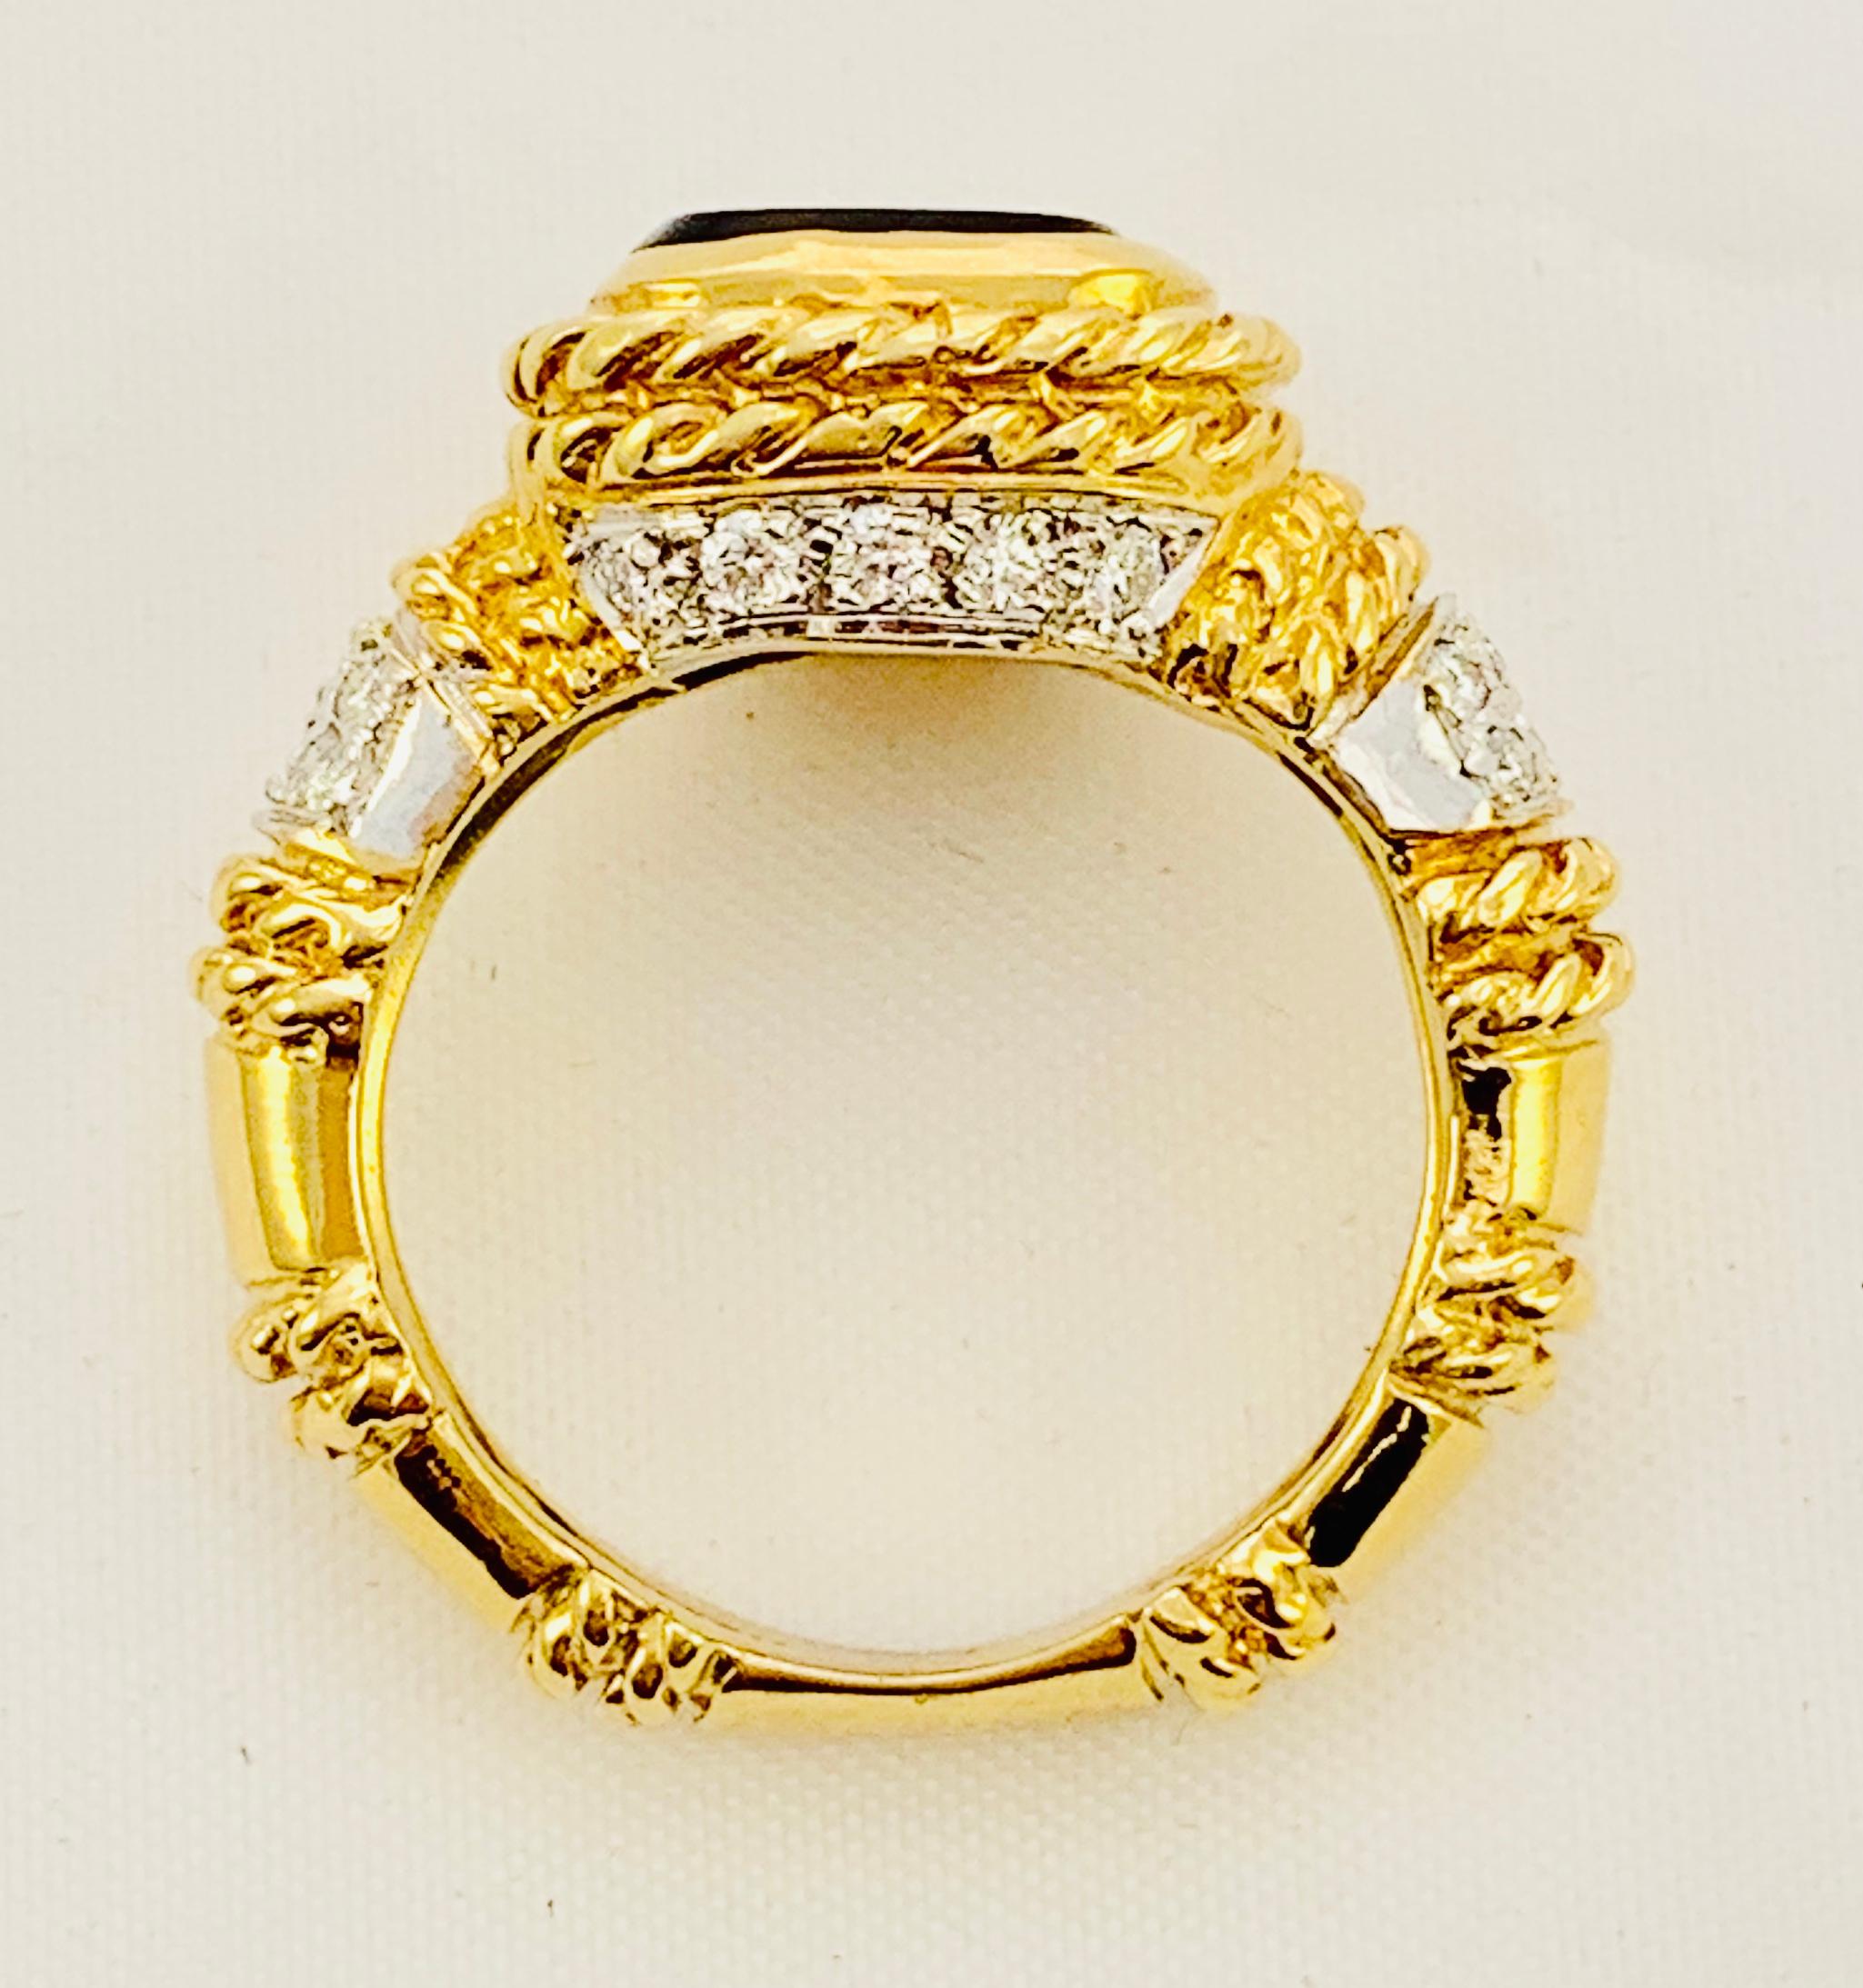 Designer Cassis 18K yellow Gold, Diamond & Onyx ladies Ring Size 5.75  2